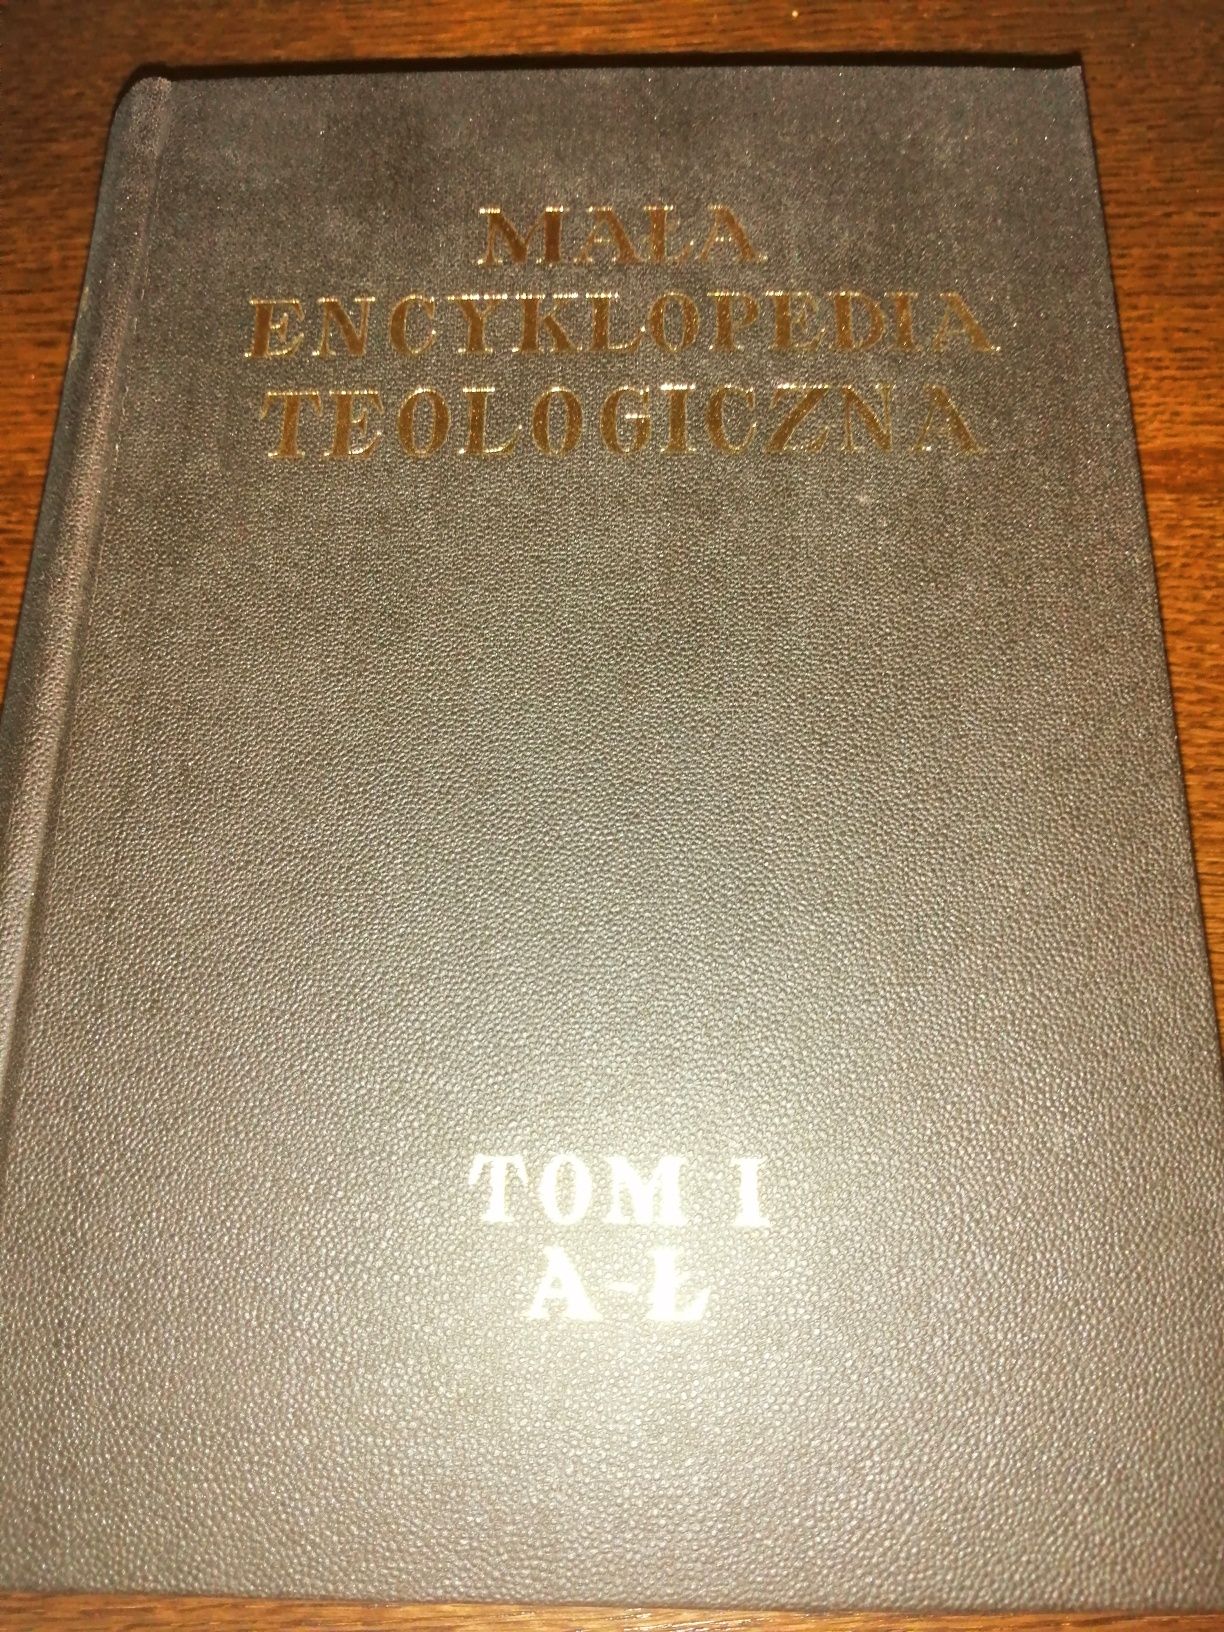 Mała encyklopedia teologiczna t. 1 A-Ł - Maksymilian Rode